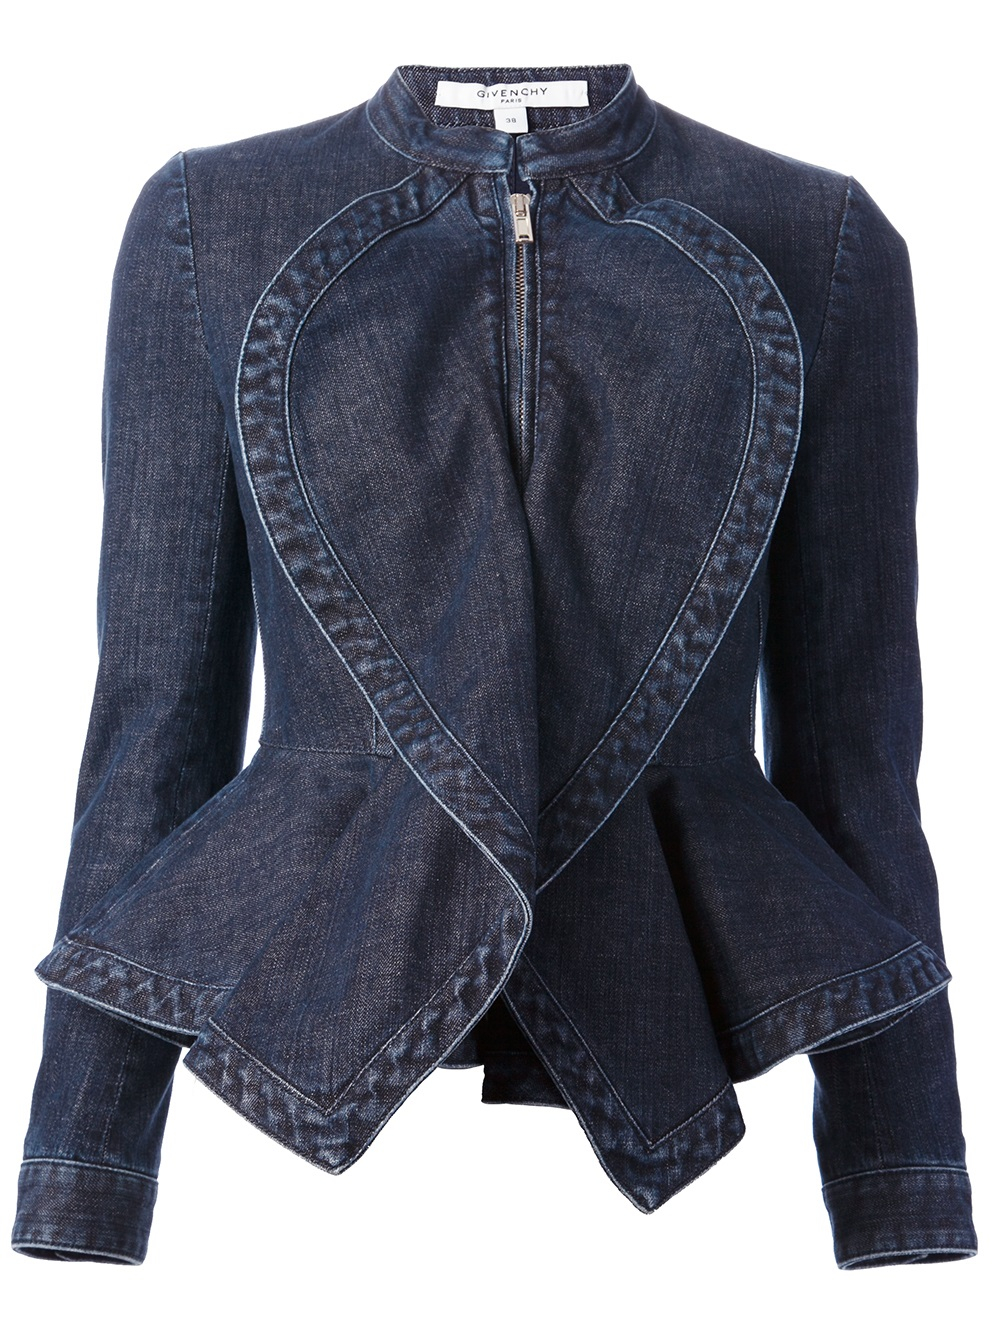 Givenchy Denim Peplum Jacket in Blue - Lyst